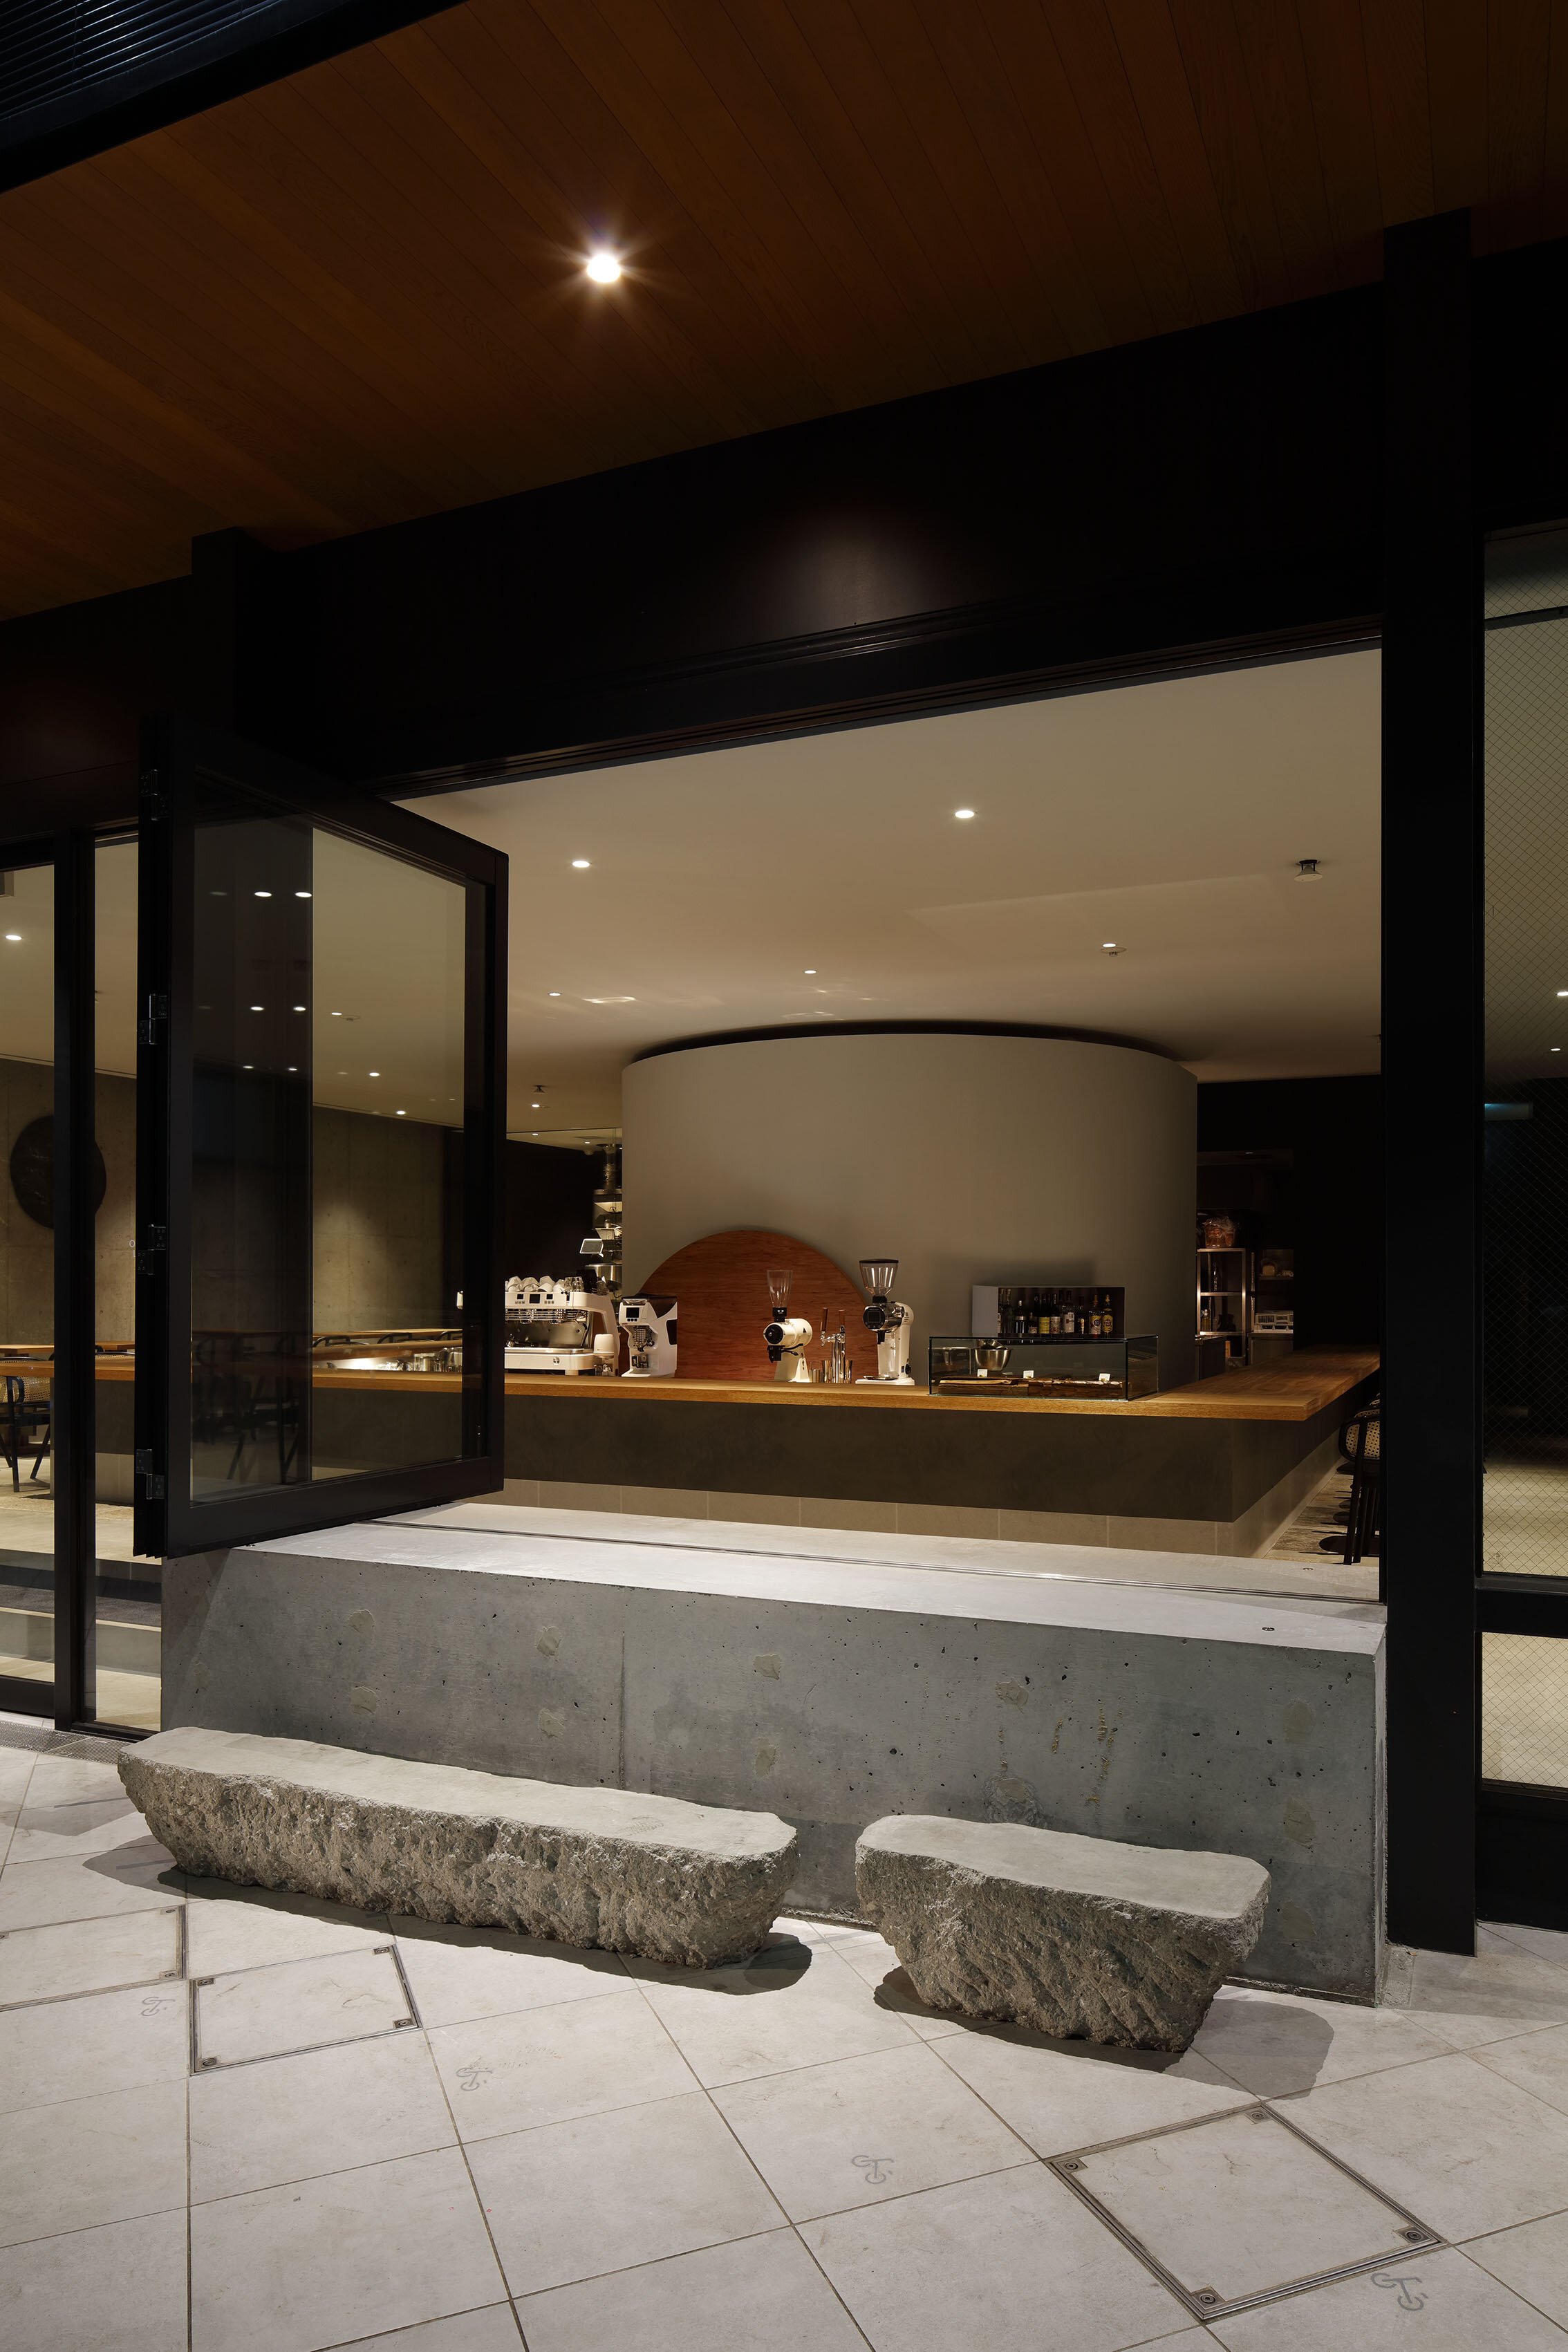  Yusuke Seki Studioの関祐介がデザインしたカフェOgawa Coffee Laboratoryの外観 